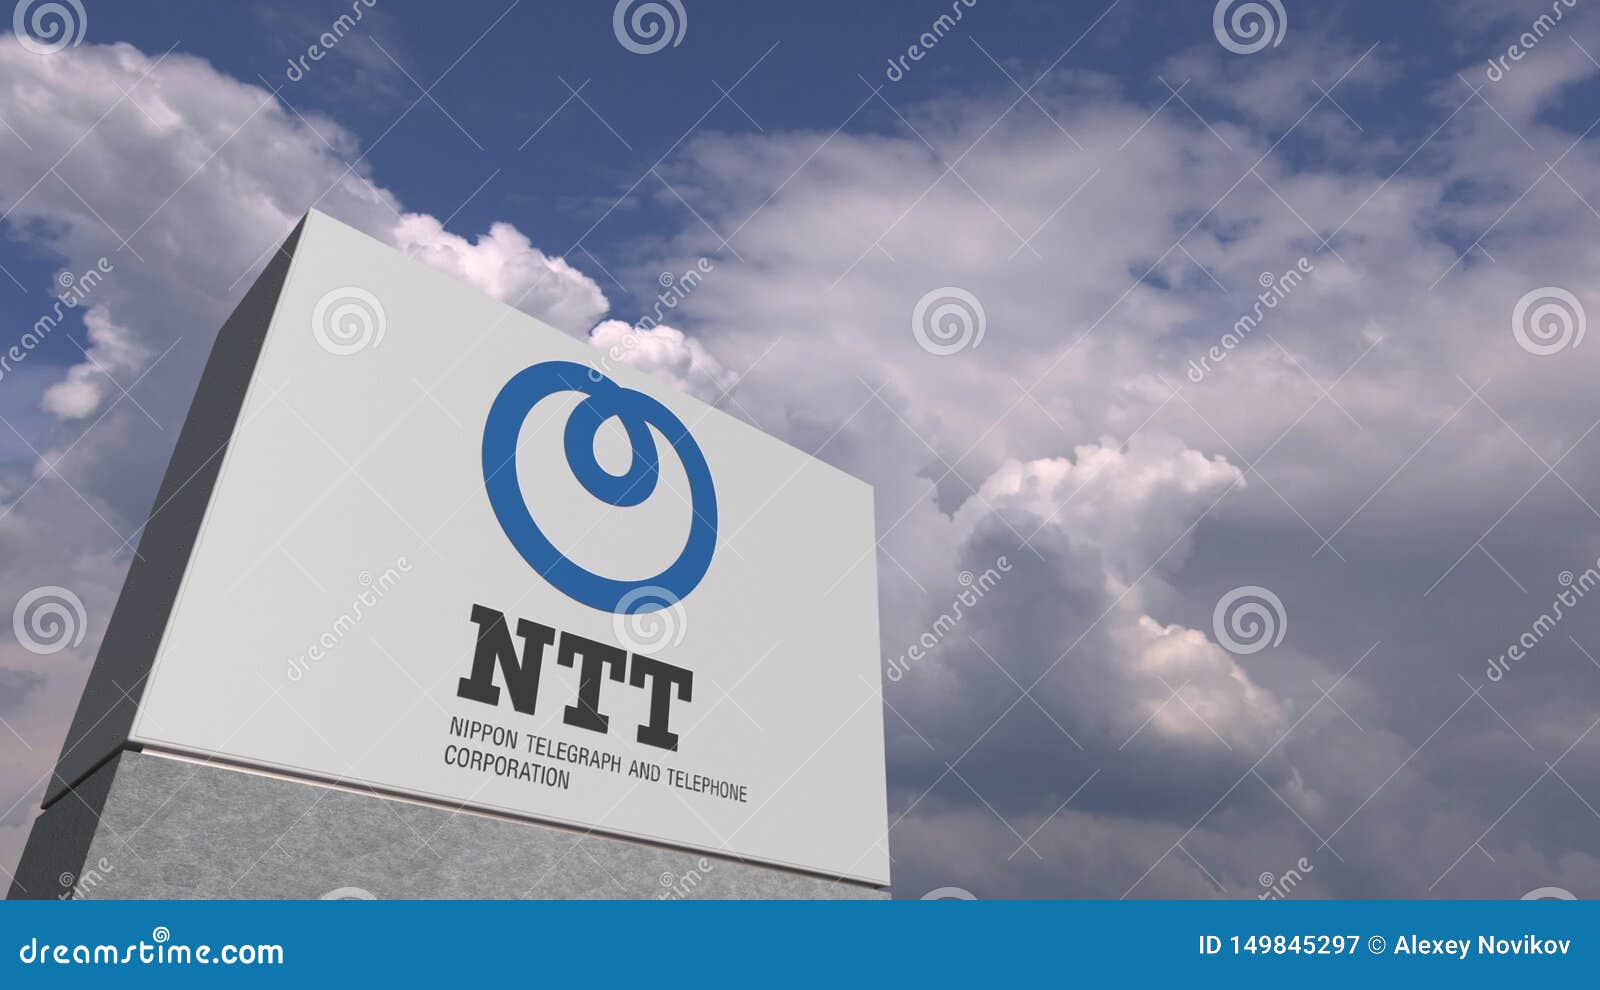 Phone corporation. Эмблема НТТ. Корпорация Nippon Graphite Fiber Corp. Nippon Corporation пирамида. NTT.